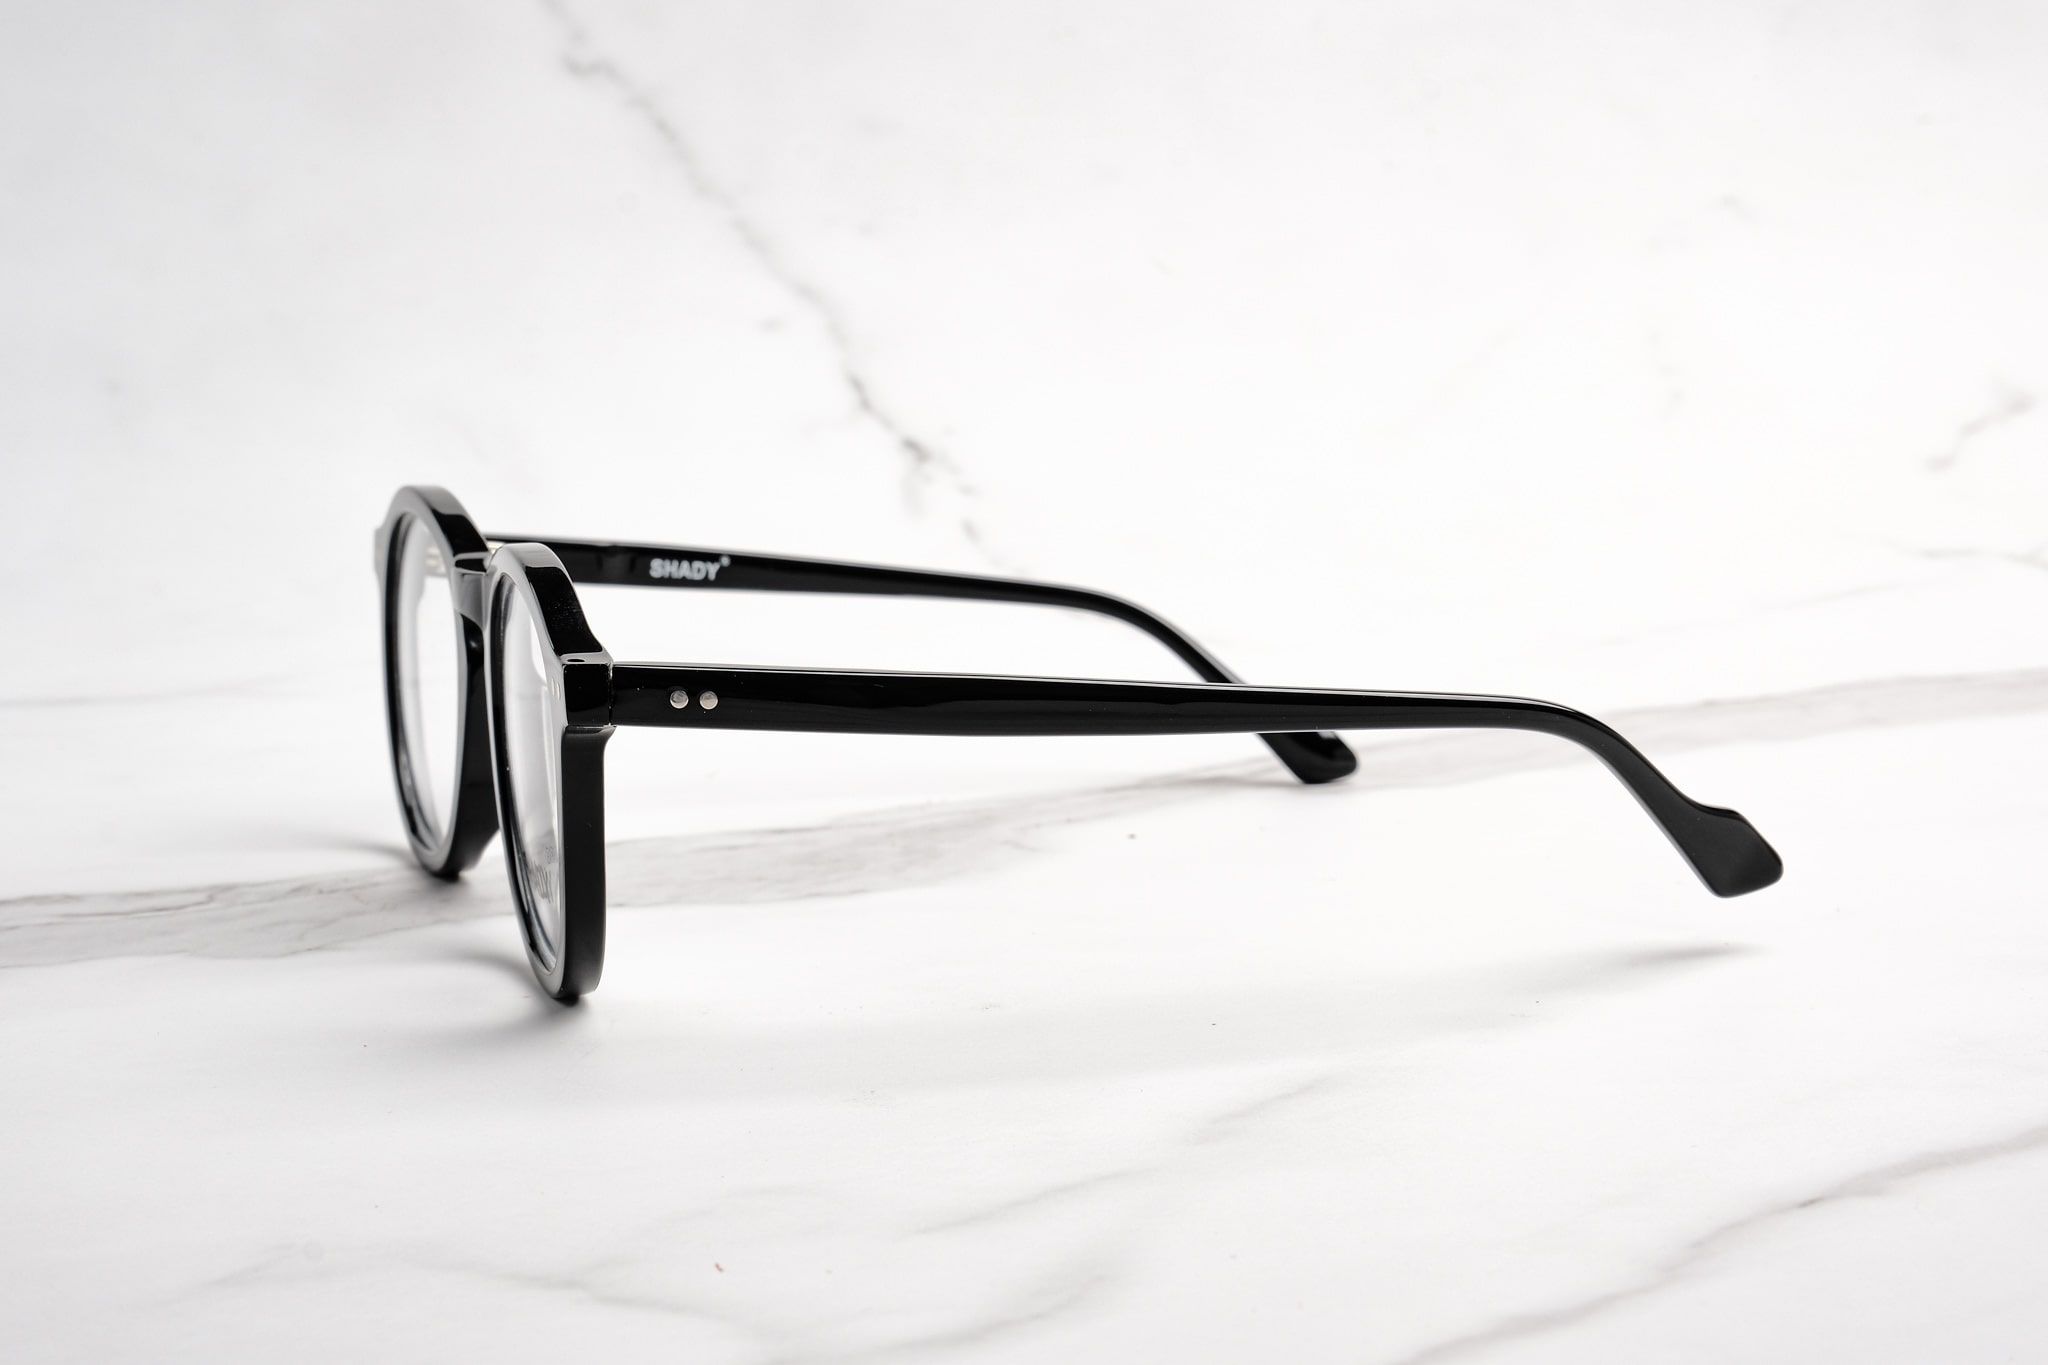  SHADY Eyewear - Glasses - G1957 